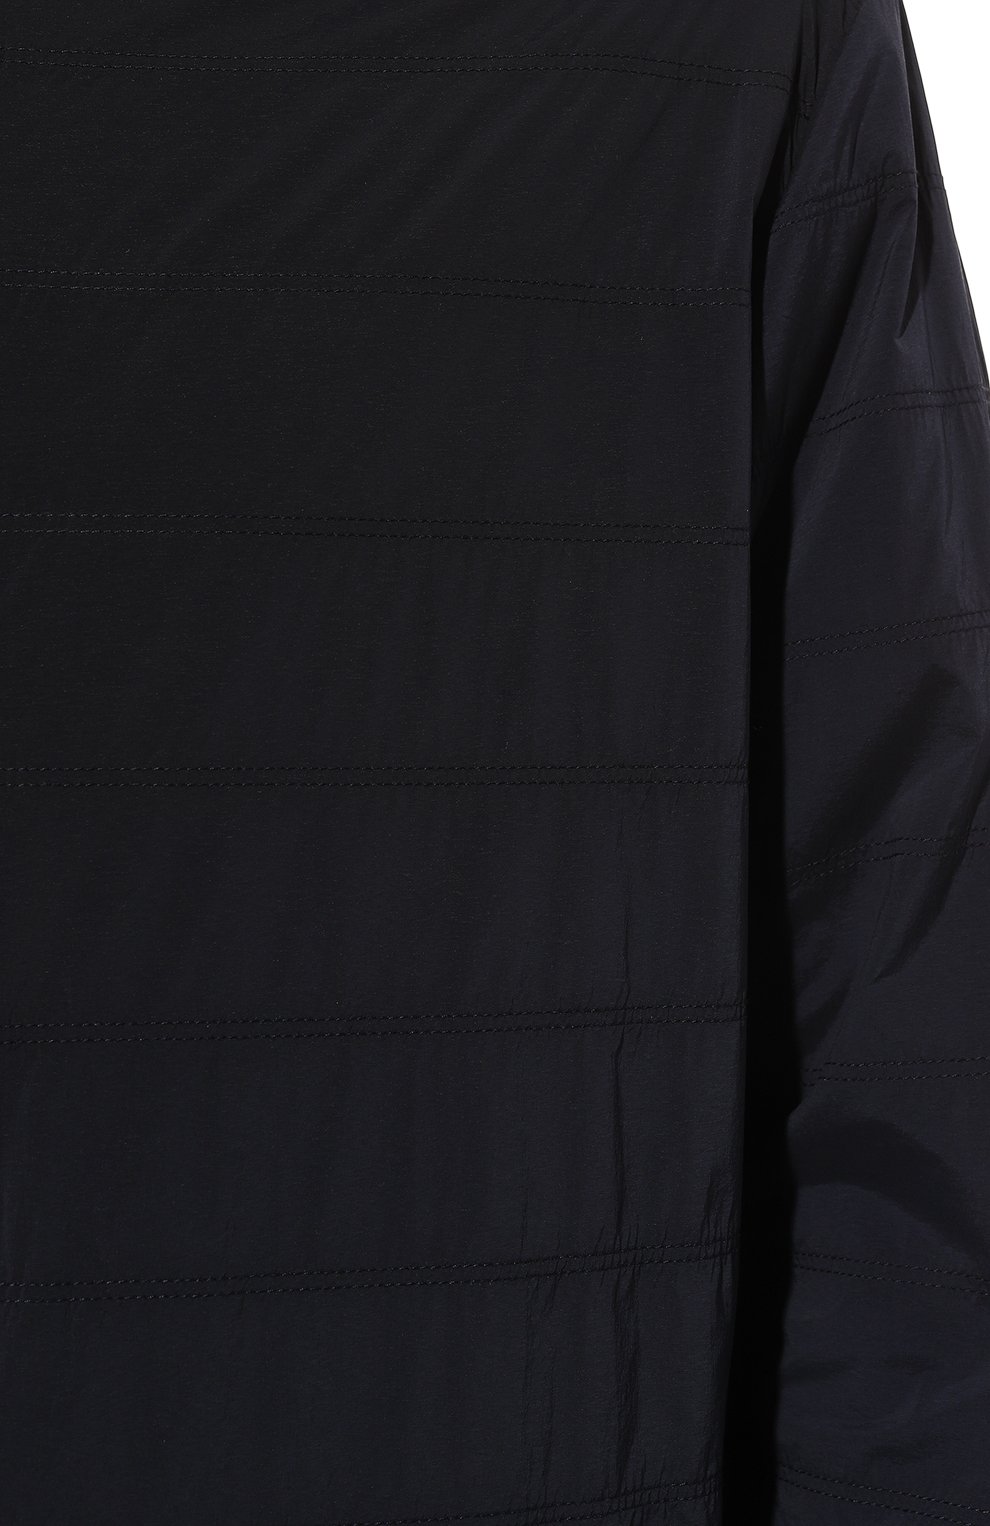 Мужская куртка BOGNER FIRE+ICE темно-сине го цвета, арт. 84127229 | Фото 5 (Кросс-КТ: Куртка, Ветровка; Рукава: Длинные; Материал внешний: Синтетический материал; Материал сплава: Проставлено; Материал подклада: Синтетический материал; Драгоценные камни: Проставлено; Длина (верхняя одежда): Короткие; Стили: Кэжуэл)